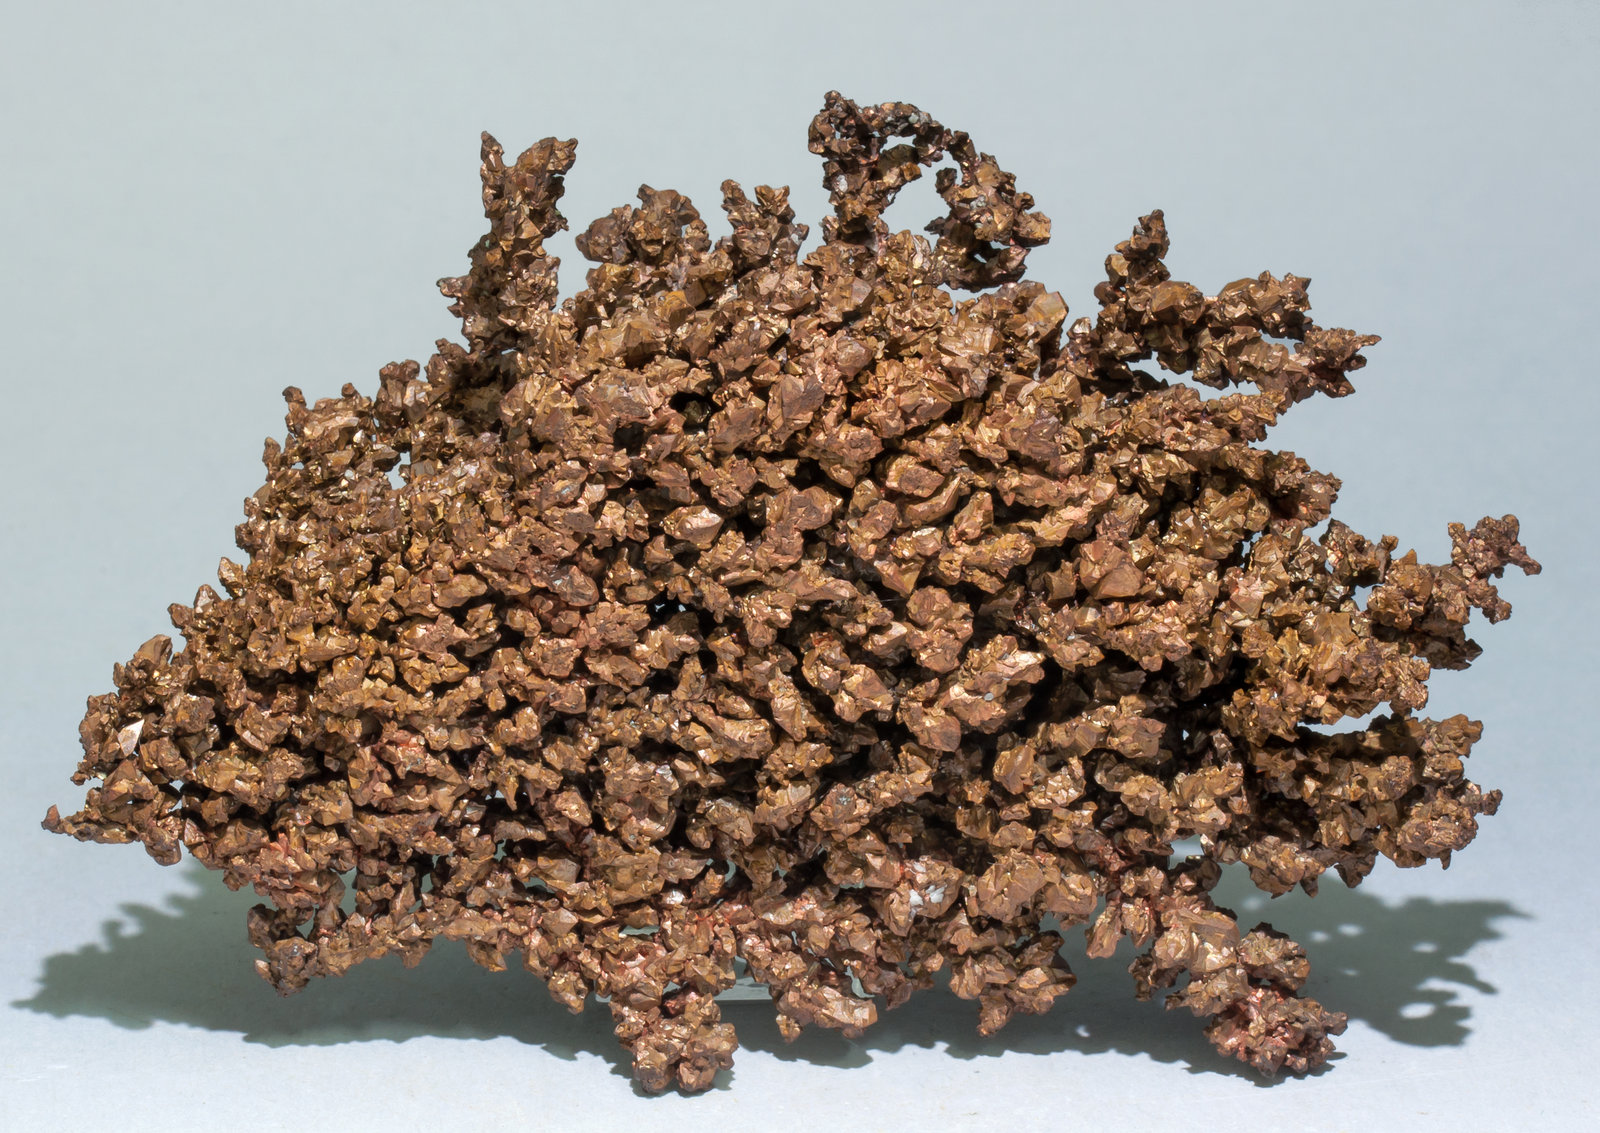 specimens/s_imagesAA1/Copper-EQ54AA1f.jpg